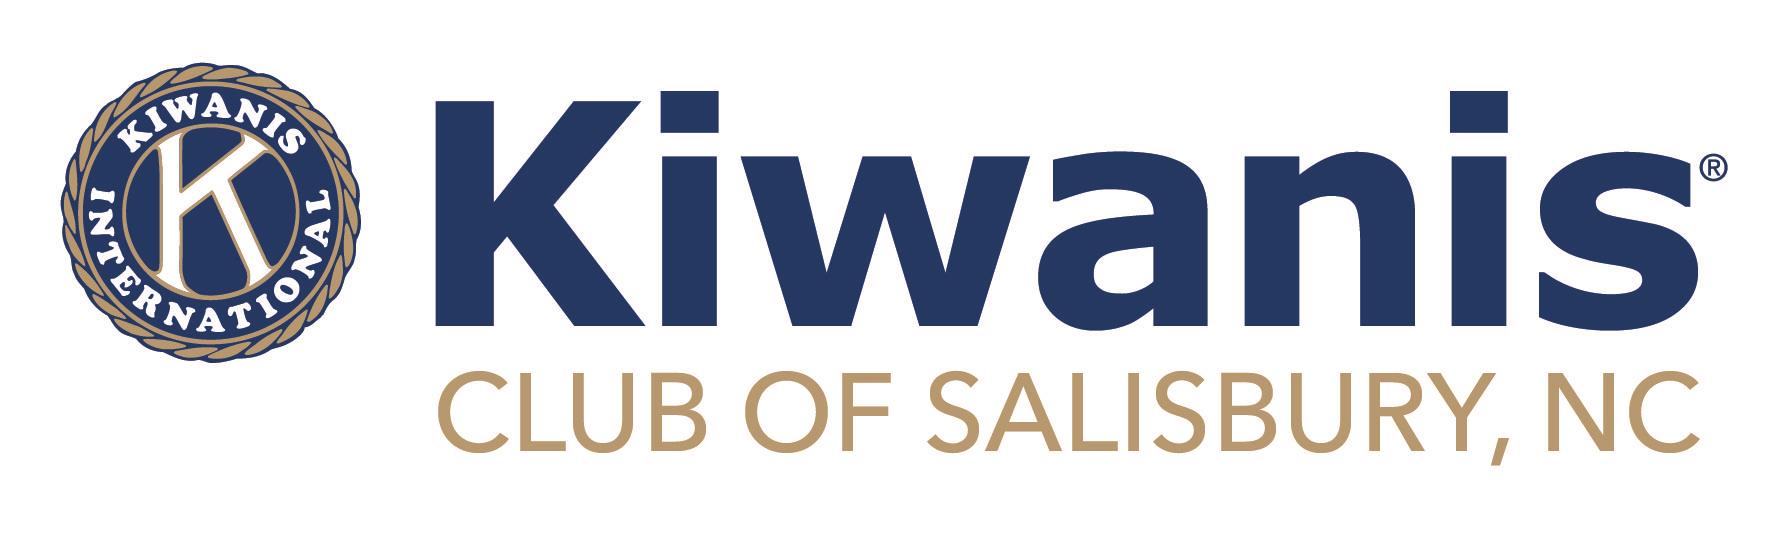 Kiwanis Club of Salisbury, NC logo